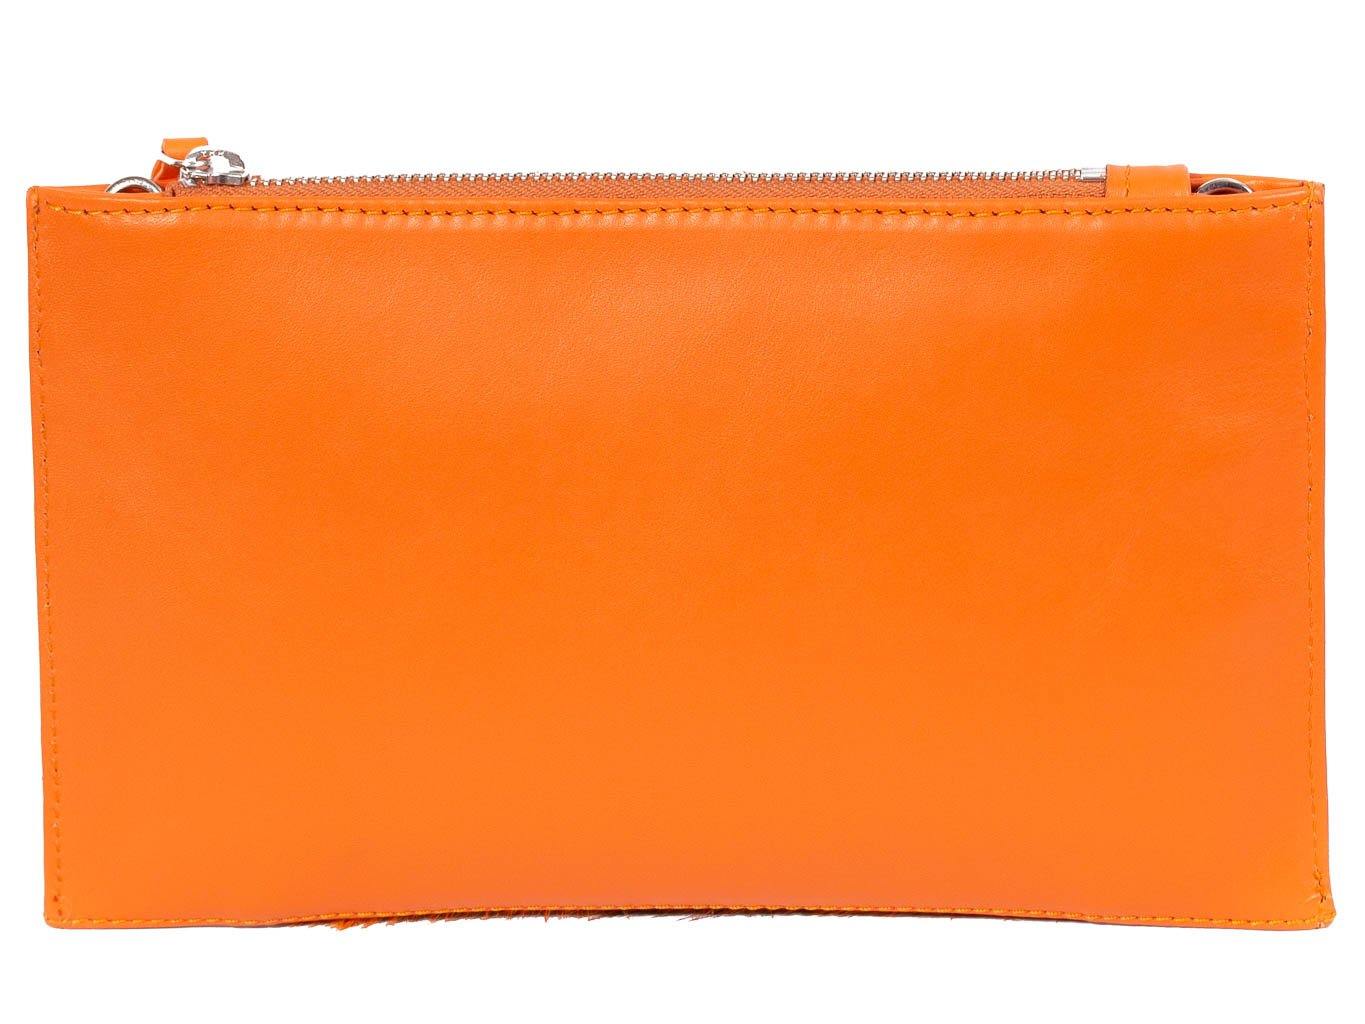 Clutch Springbok Handbag in Orange with a stripe feature by Sherene Melinda back